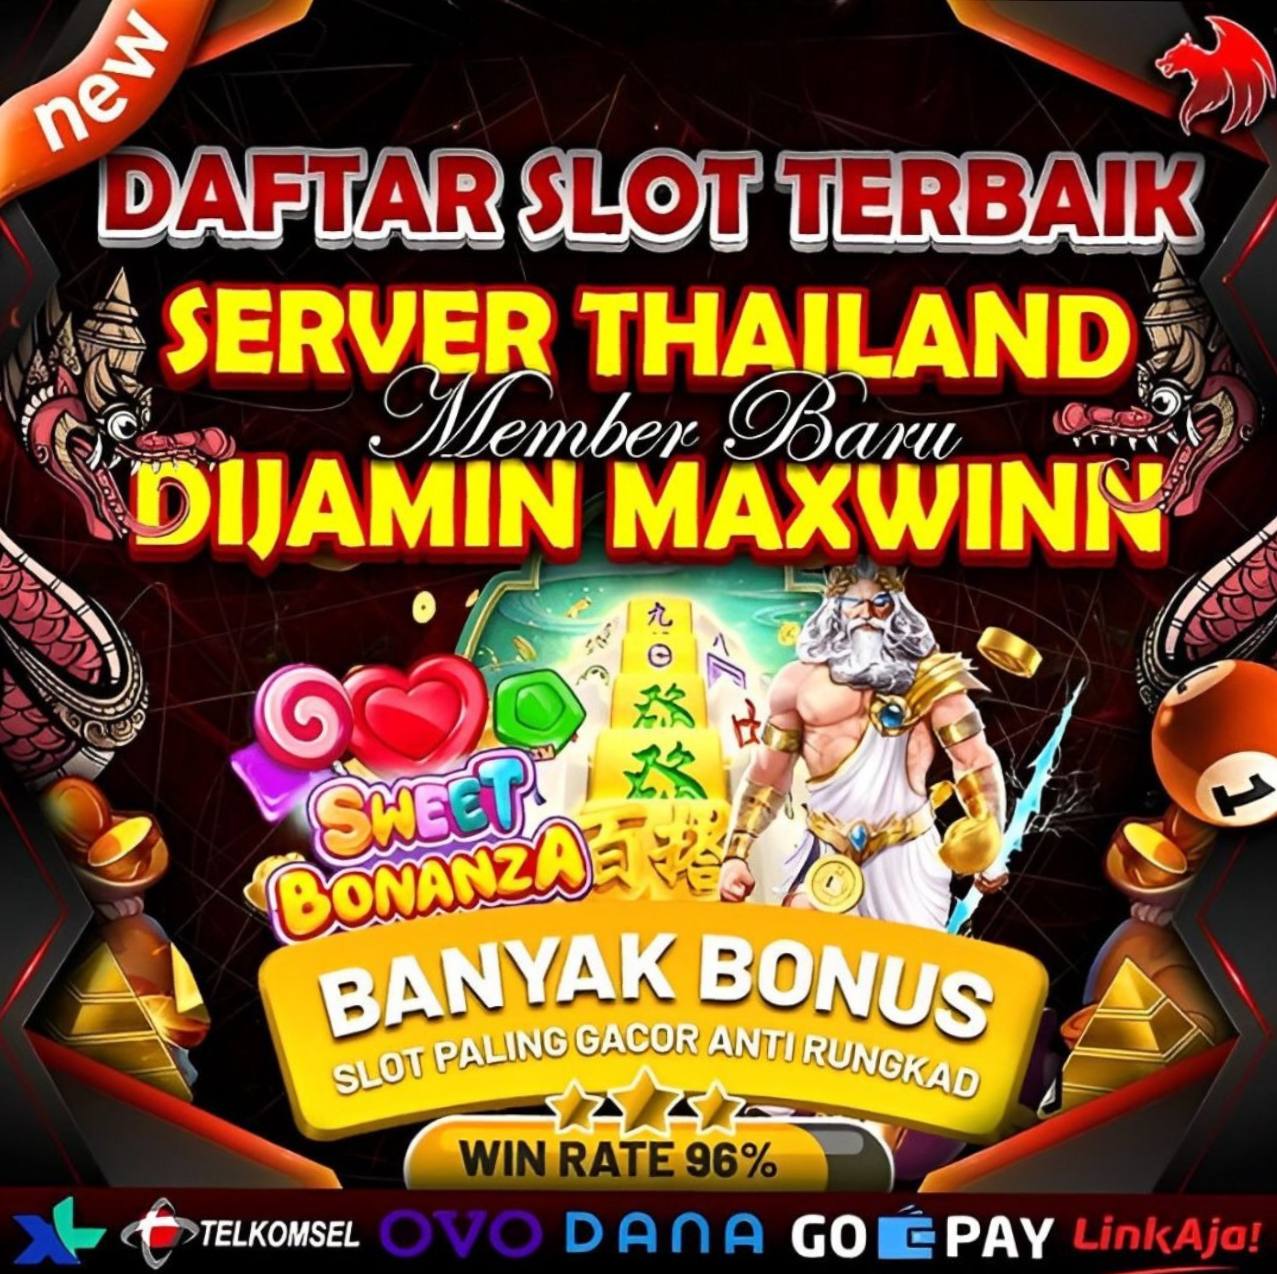 WARNETSLOT : Daftar Slot Server Thailand Gampang Maxwin Tiap Hari